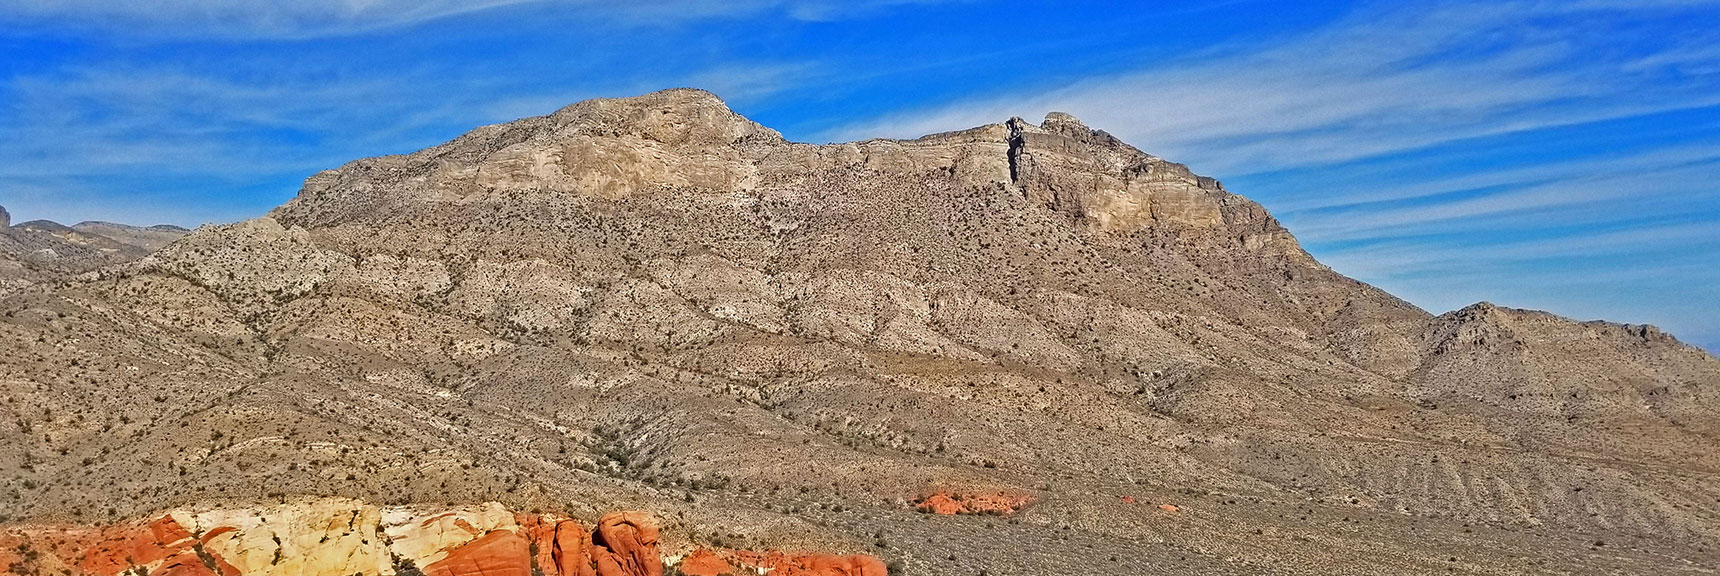 More of Damsel Peak Towering Above Brownstone Basin | Kraft Mountain, Gateway Canyon Loop, Calico Basin, Nevada